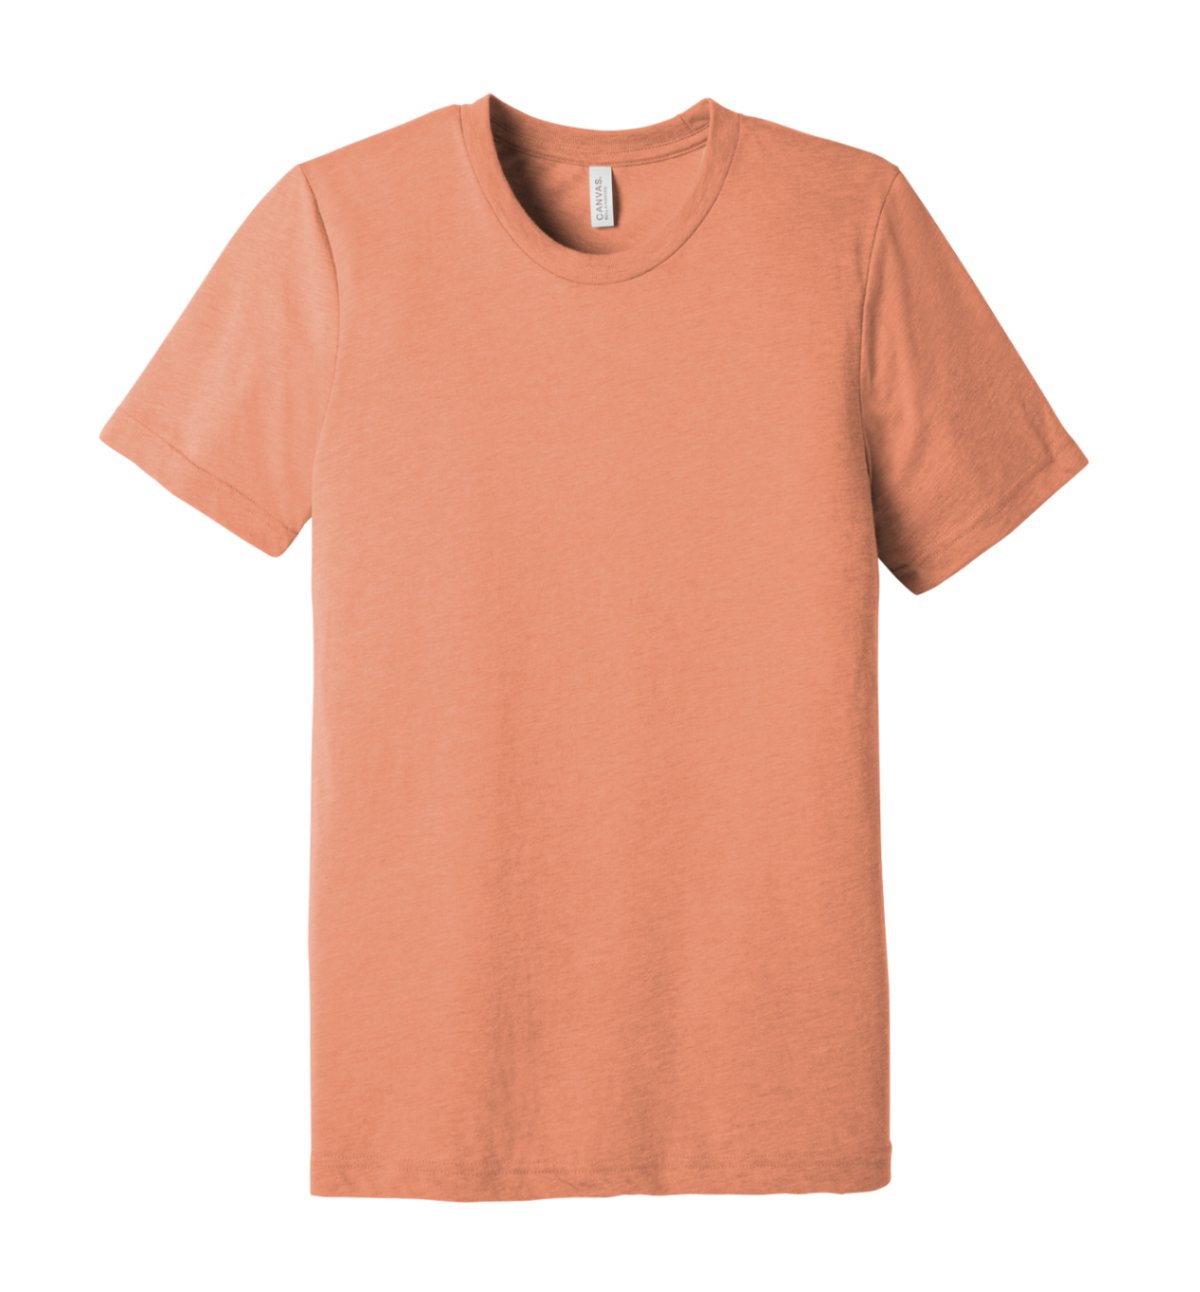 Customize Bella + Canvas Unisex 3/4 Sleeve Baseball T-Shirt